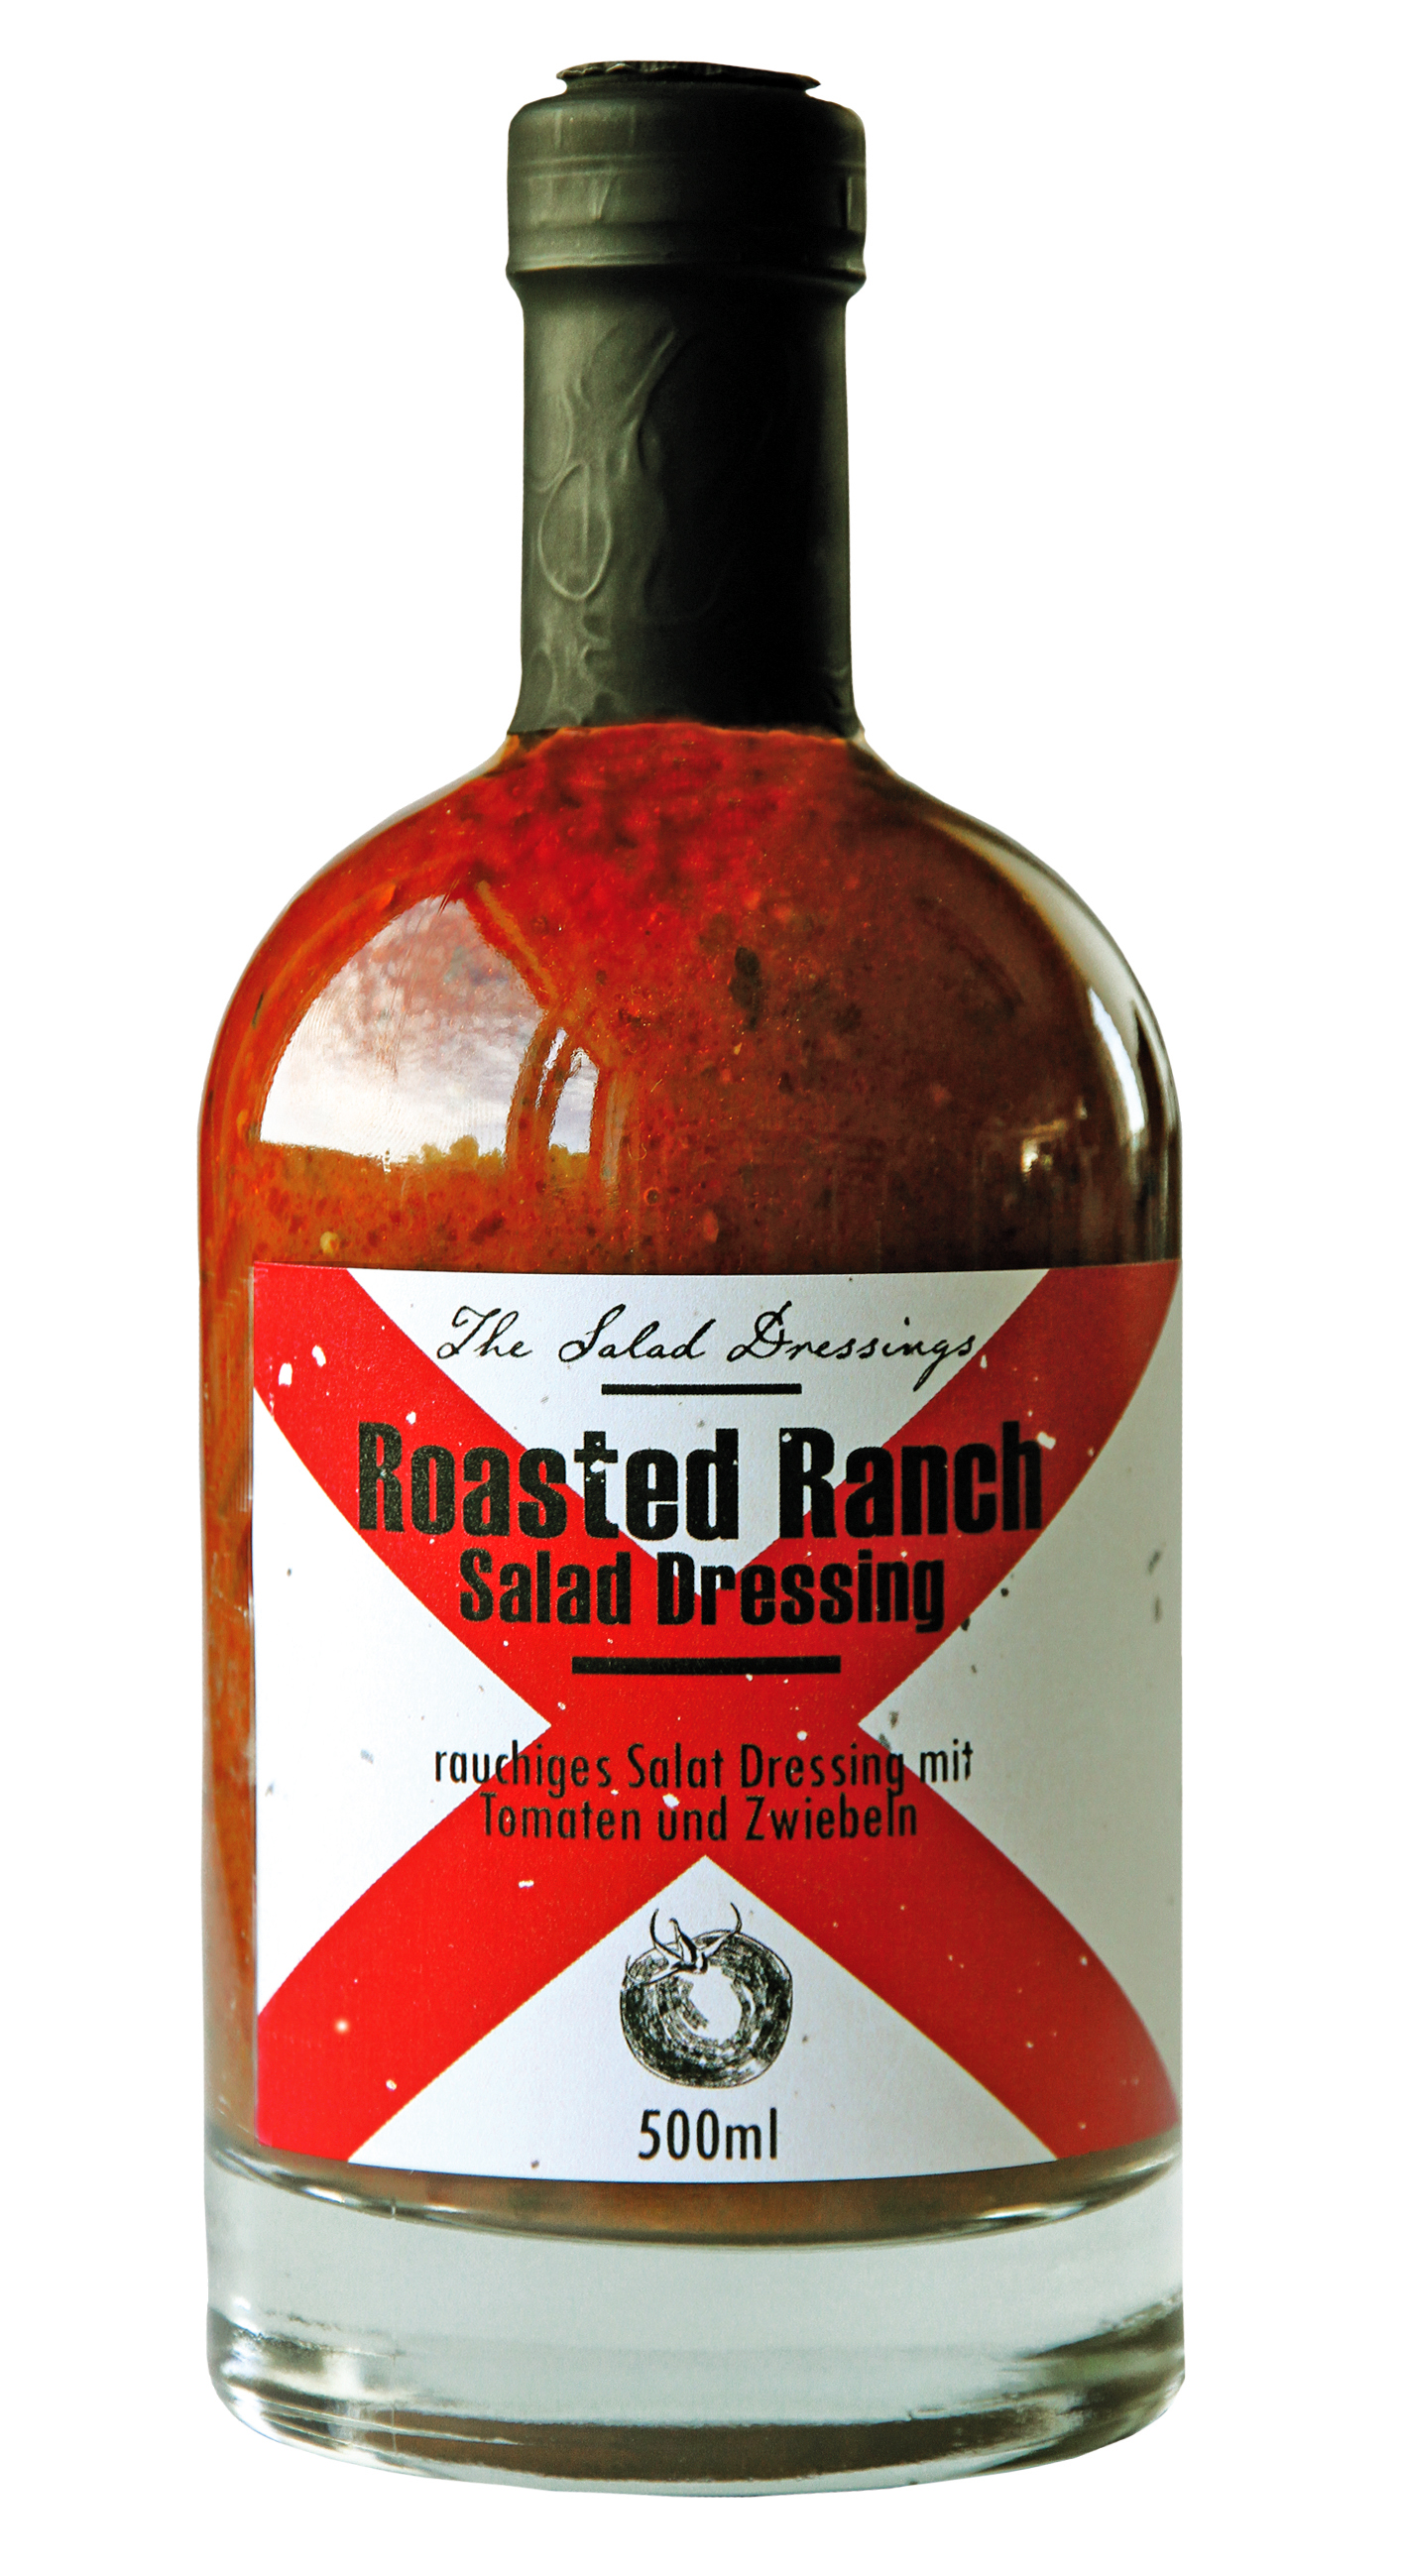 Roasted Ranch Salad Dressing 500ml